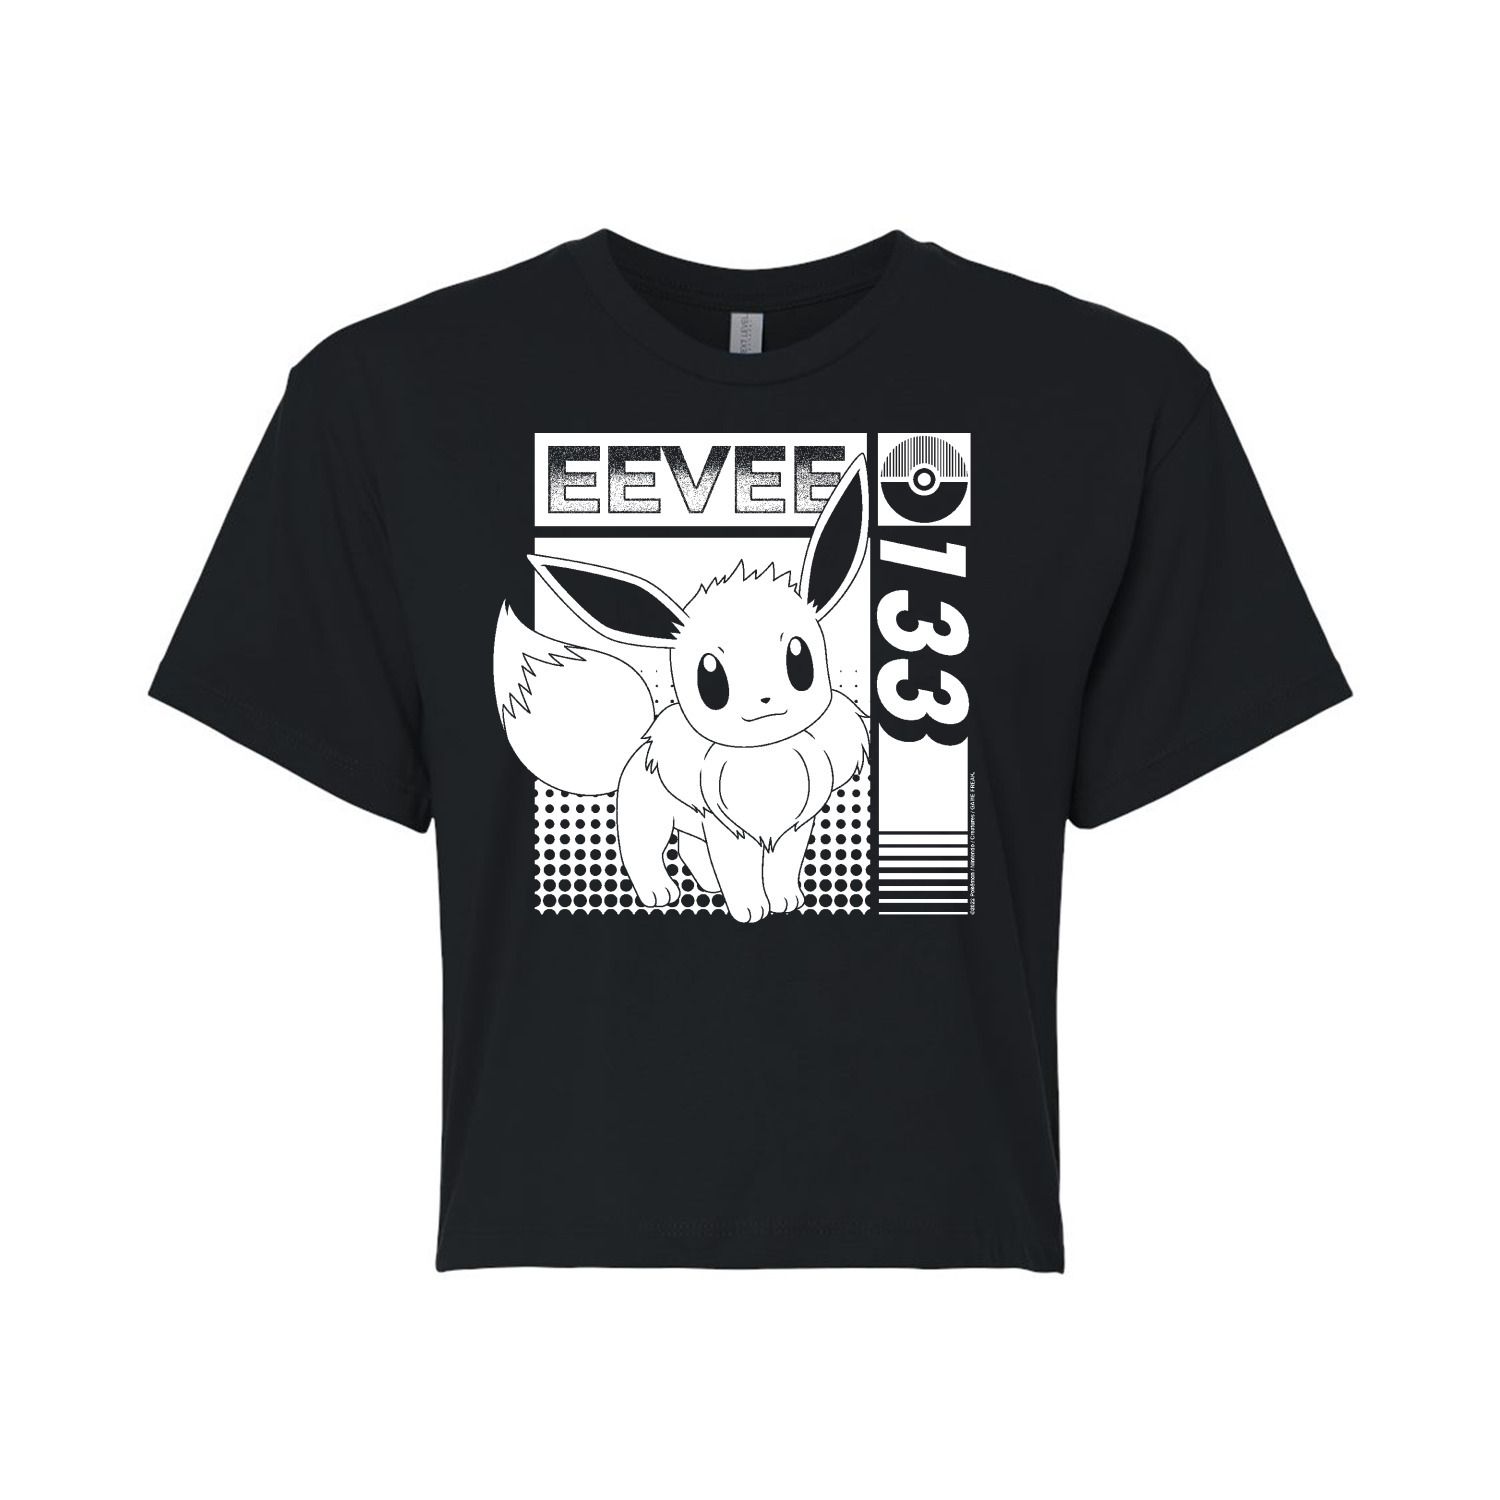 Укороченная футболка с рисунком Pokémon для детей Eeevee 133 Licensed Character